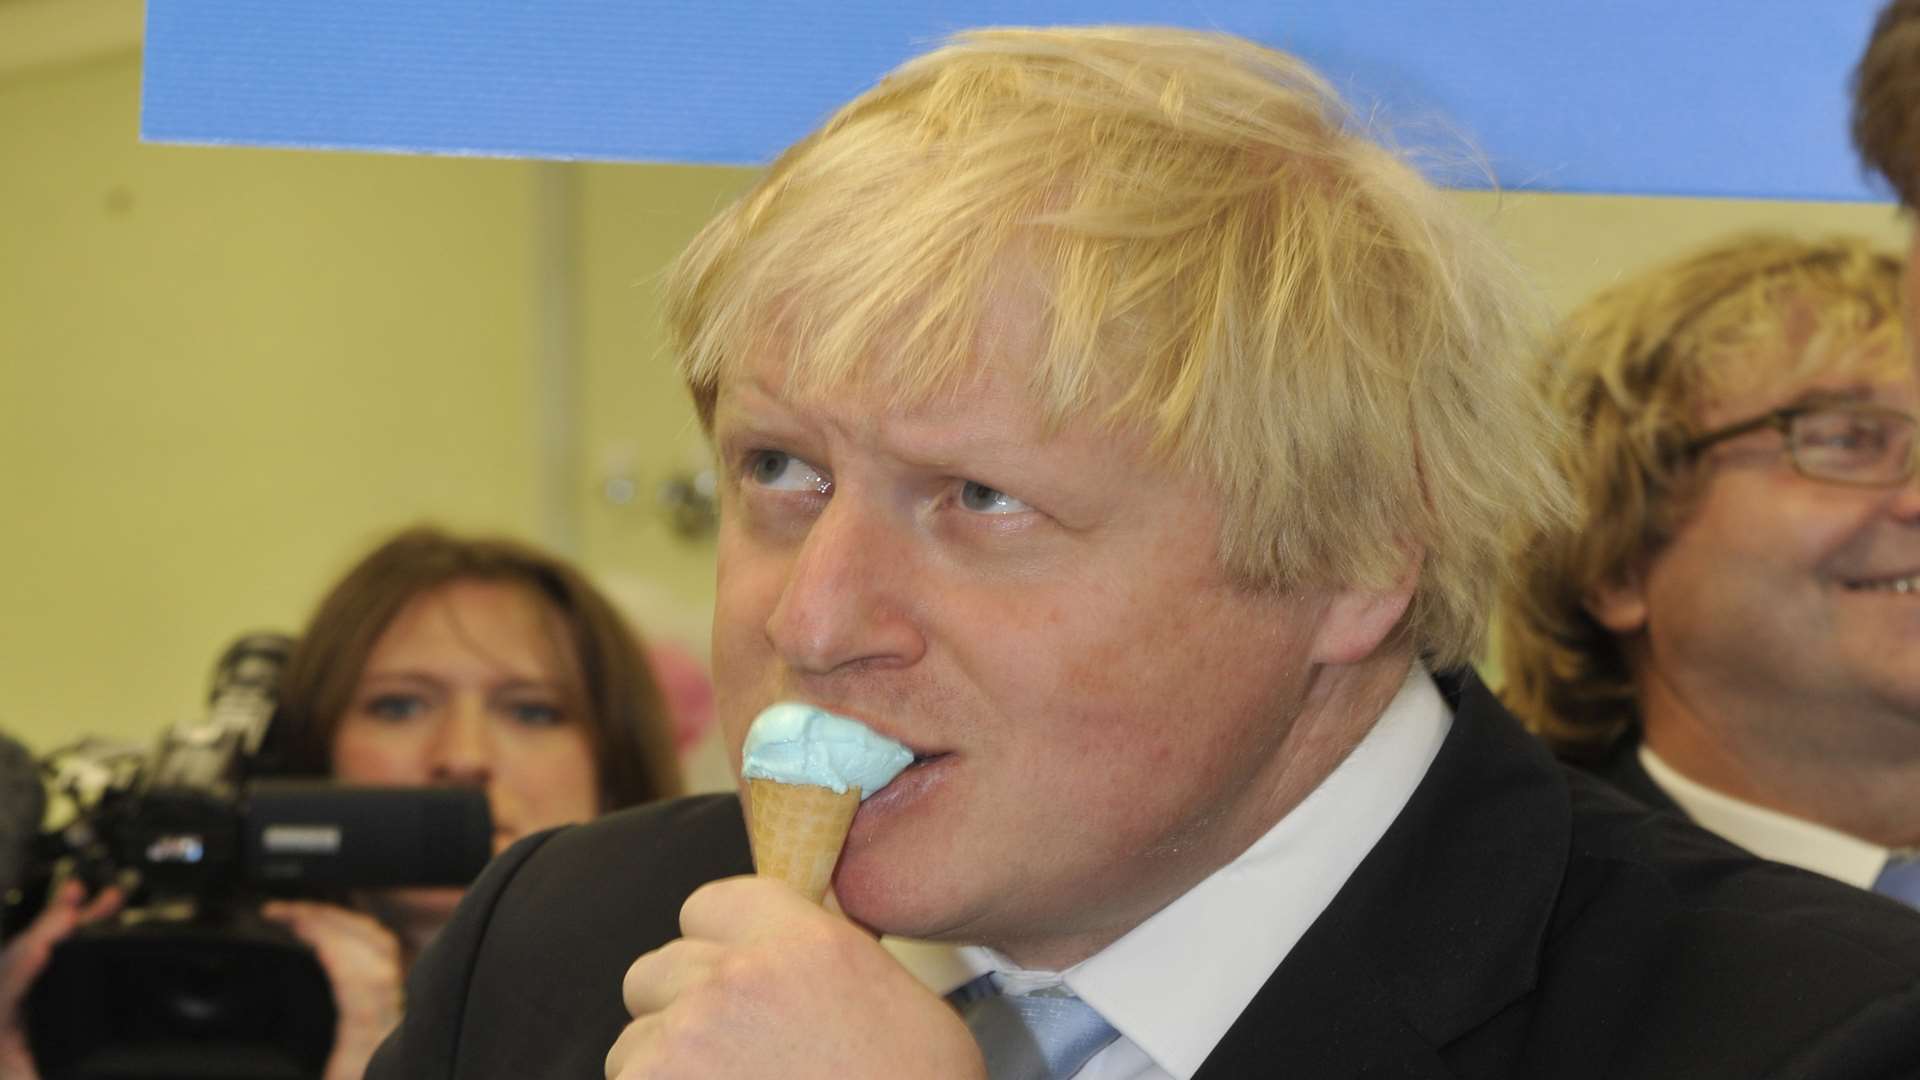 The Mayor of London enjoys an ice cream in Ramsgate